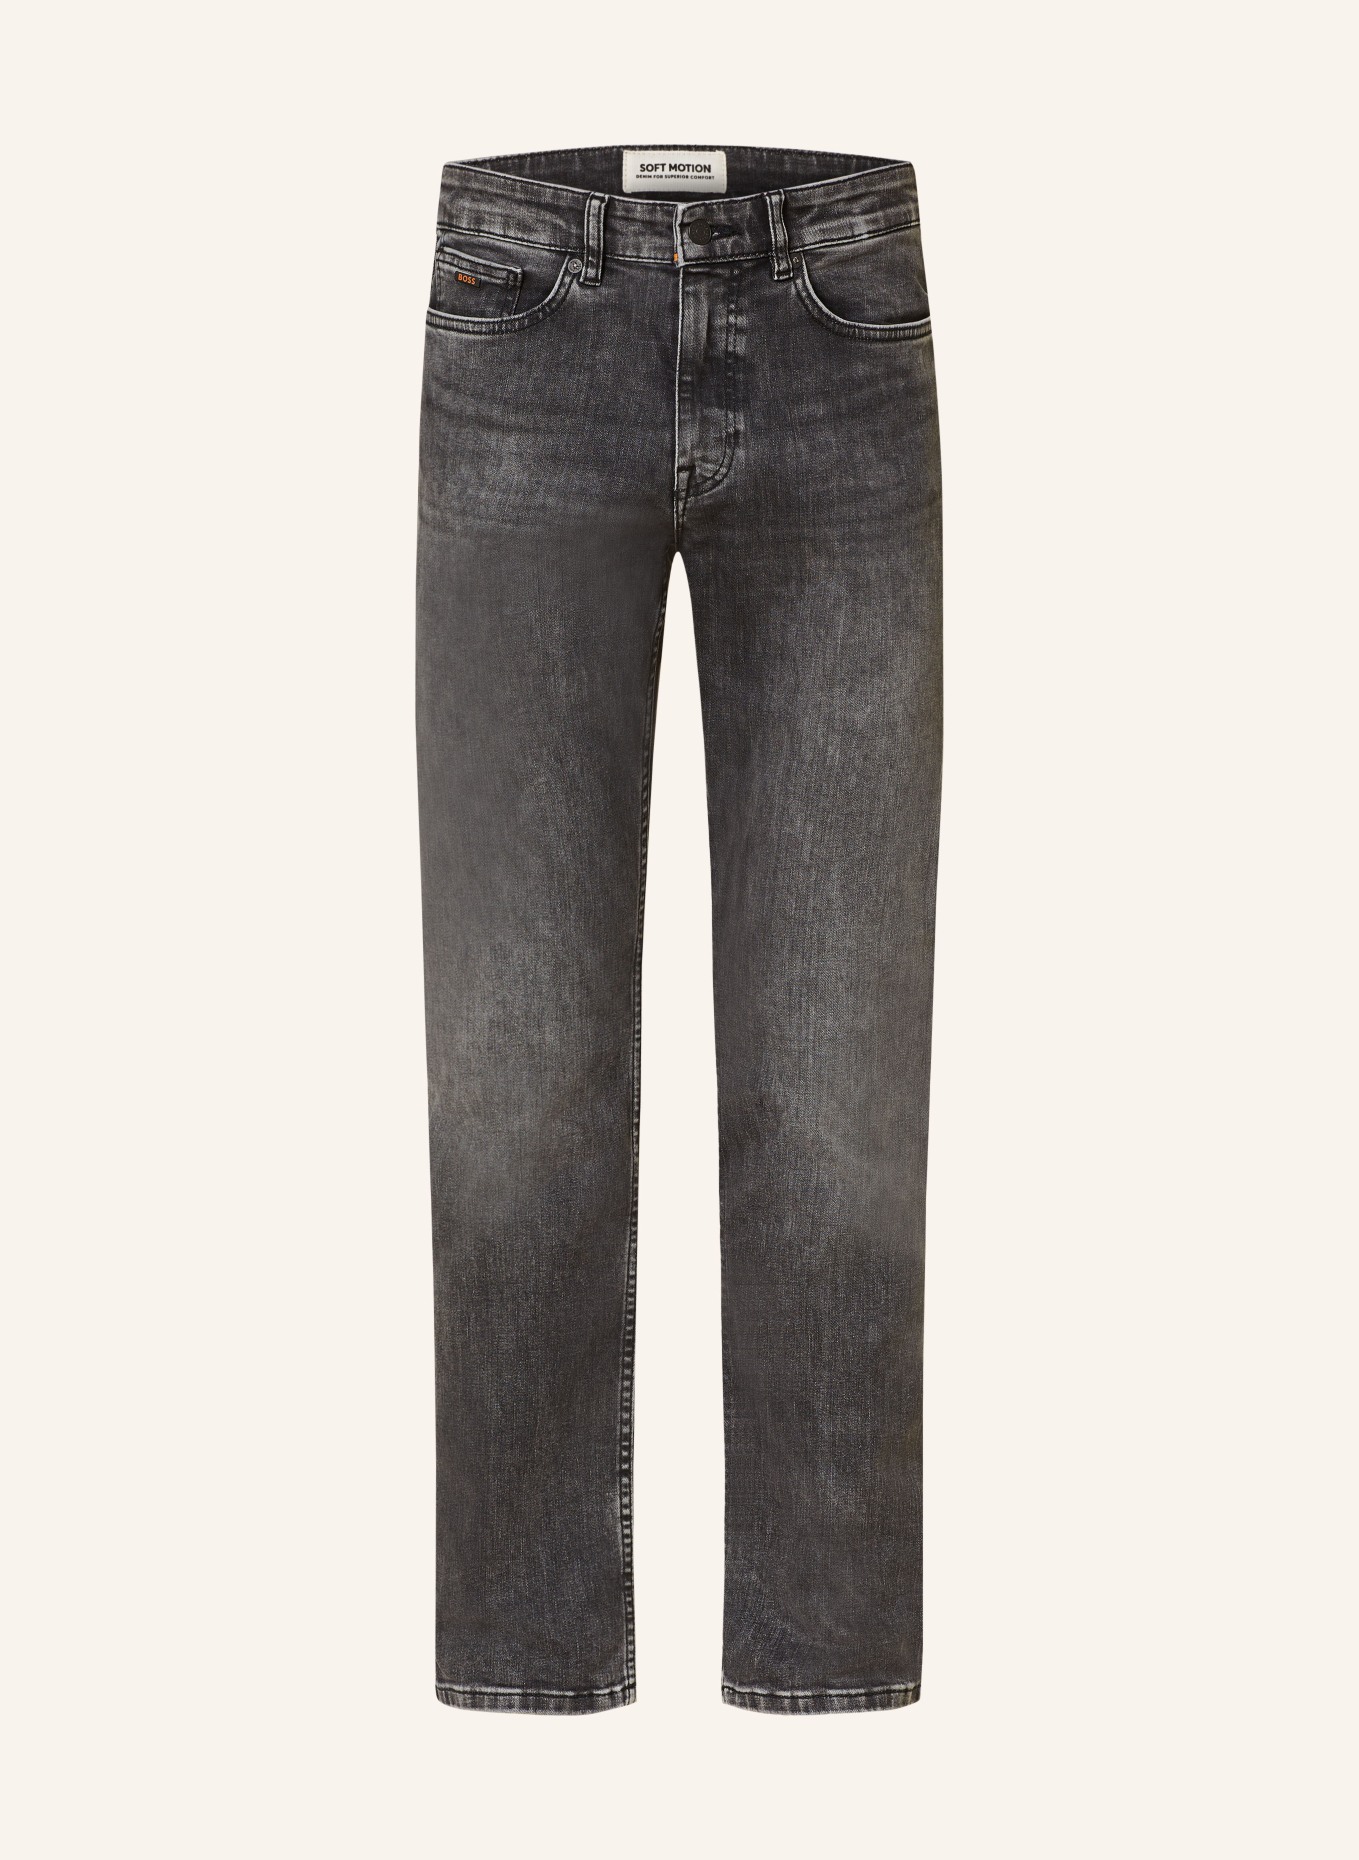 BOSS Jeans DELAWARE Slim Fit, Farbe: DUNKELGRAU (Bild 1)